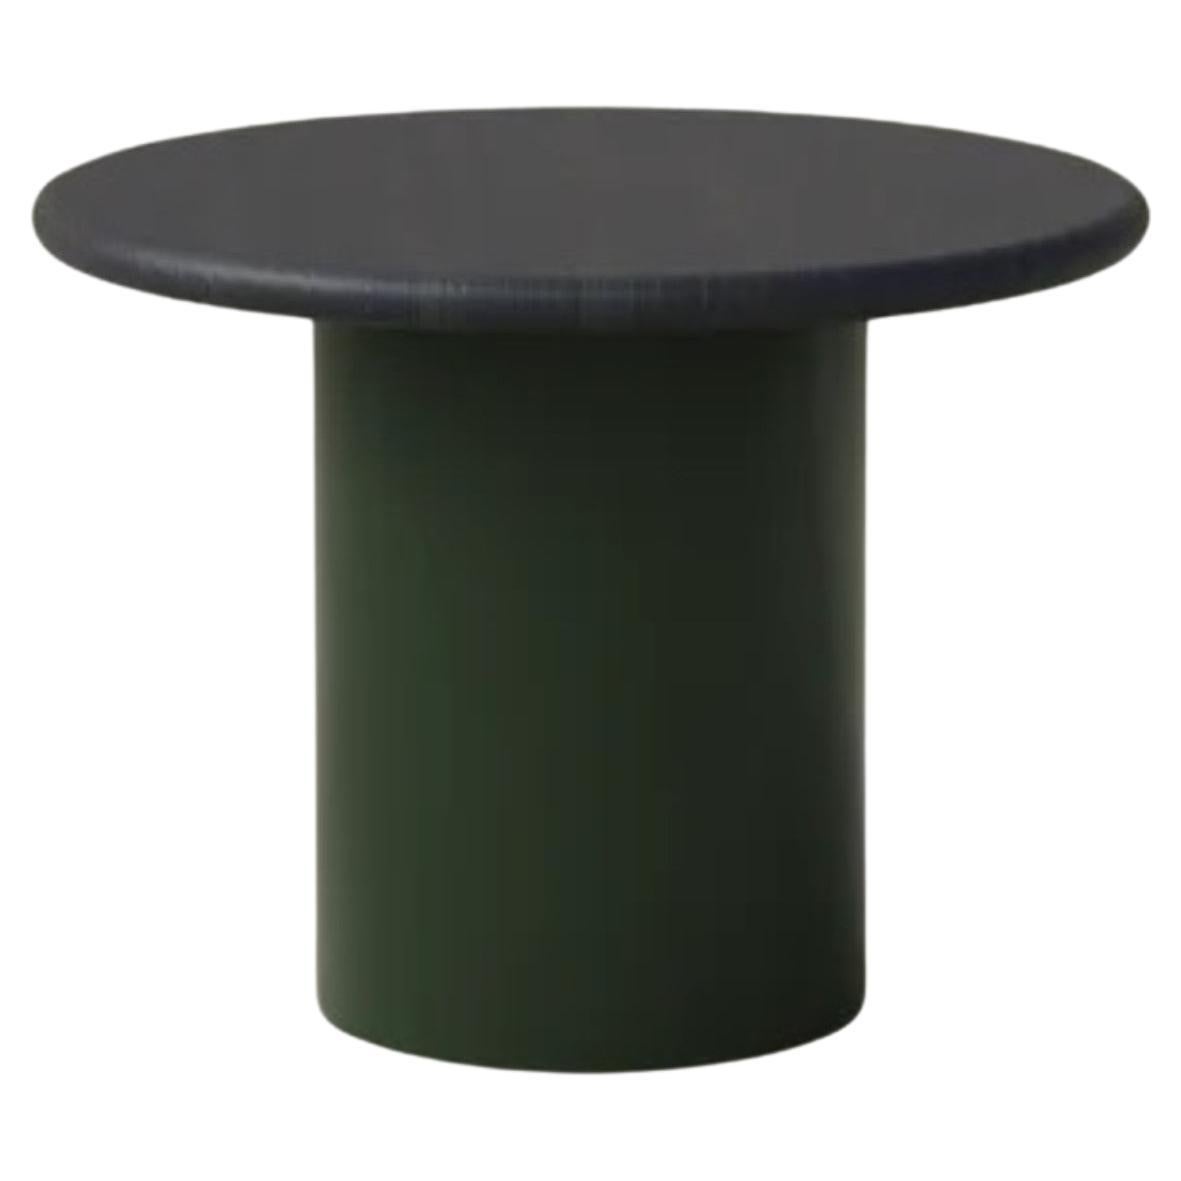 Raindrop Coffee Table, 500, Black Oak / Moss Green